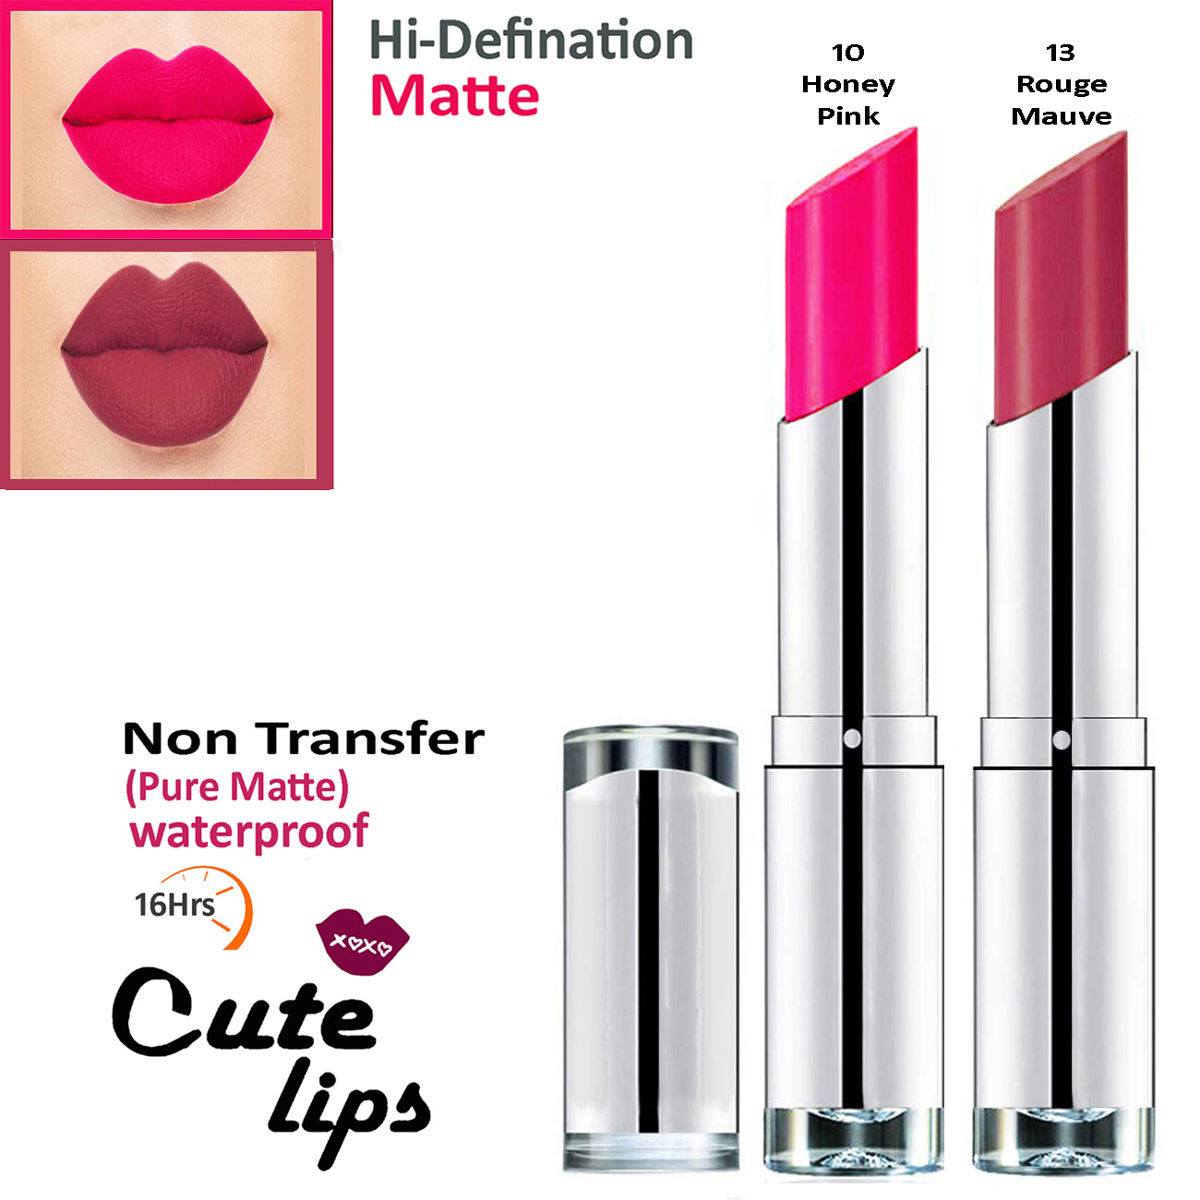 bq BLAQUE Cute Lips Non Transfer Matte Lipstick 2.4 gm each - 10 ...